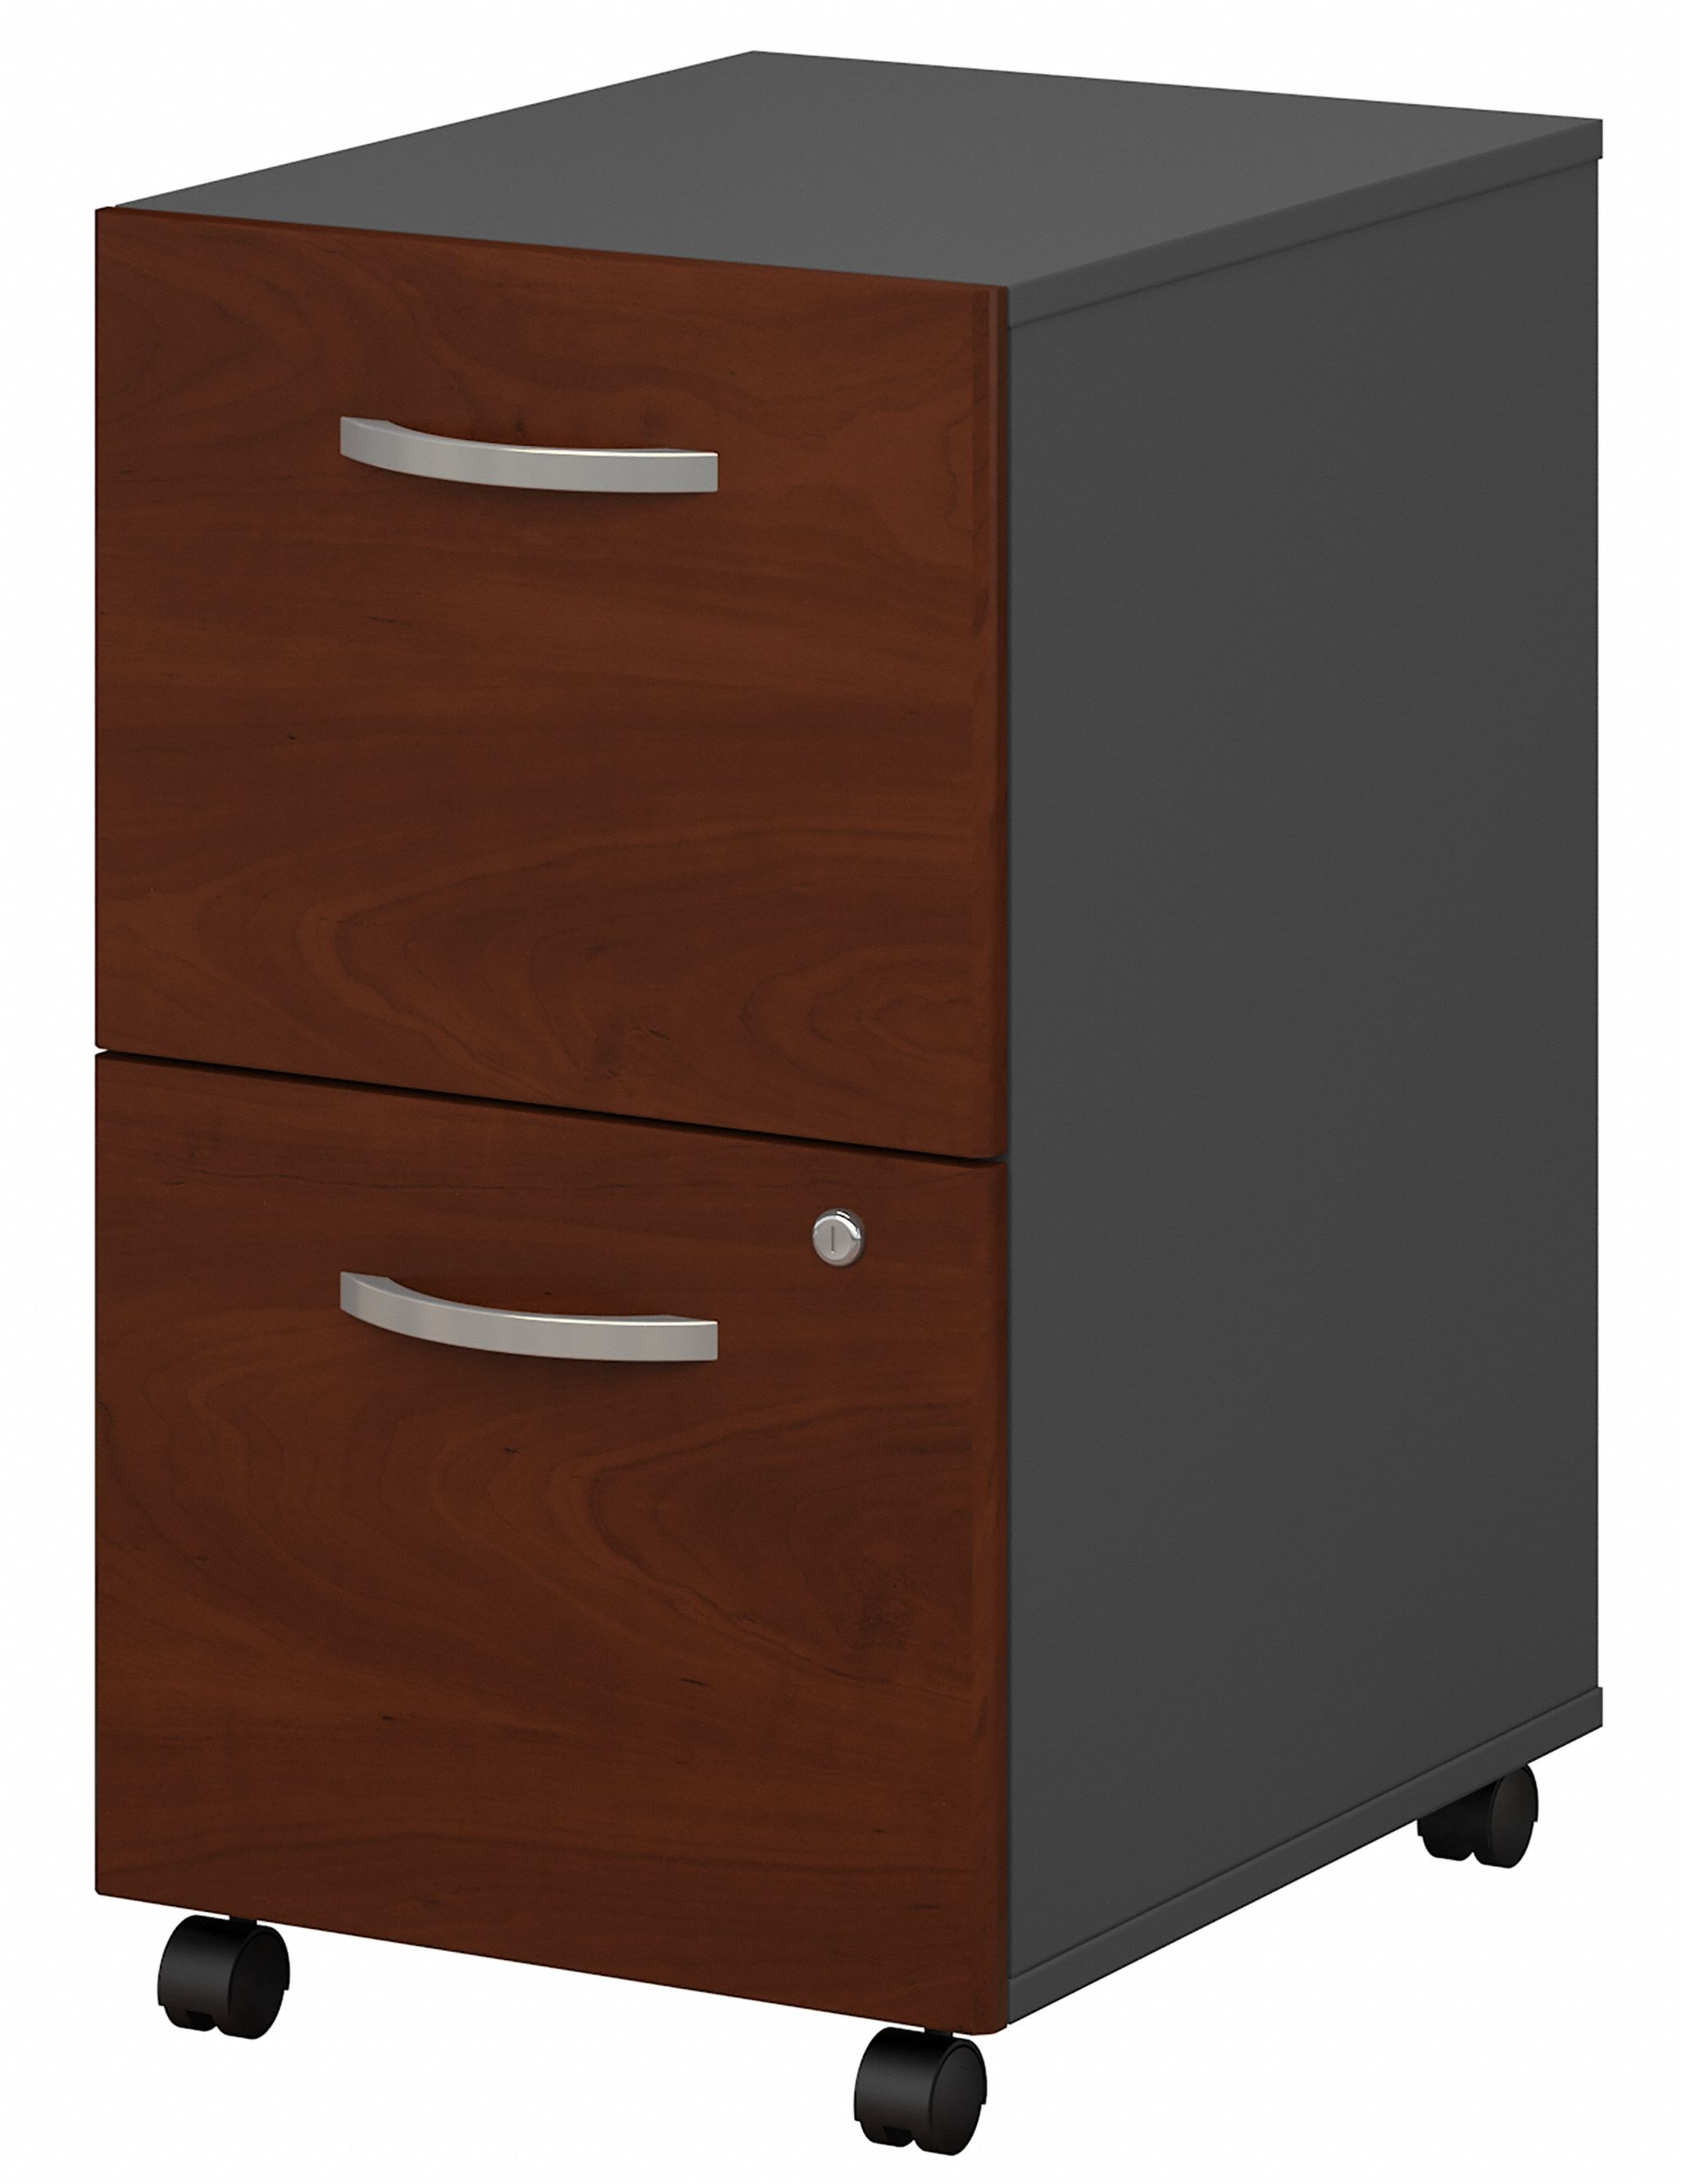 Shop Bush Business Furniture Series C 2 Drawer Mobile File Cabinet 02 WC24452 #color_hansen cherry/graphite gray